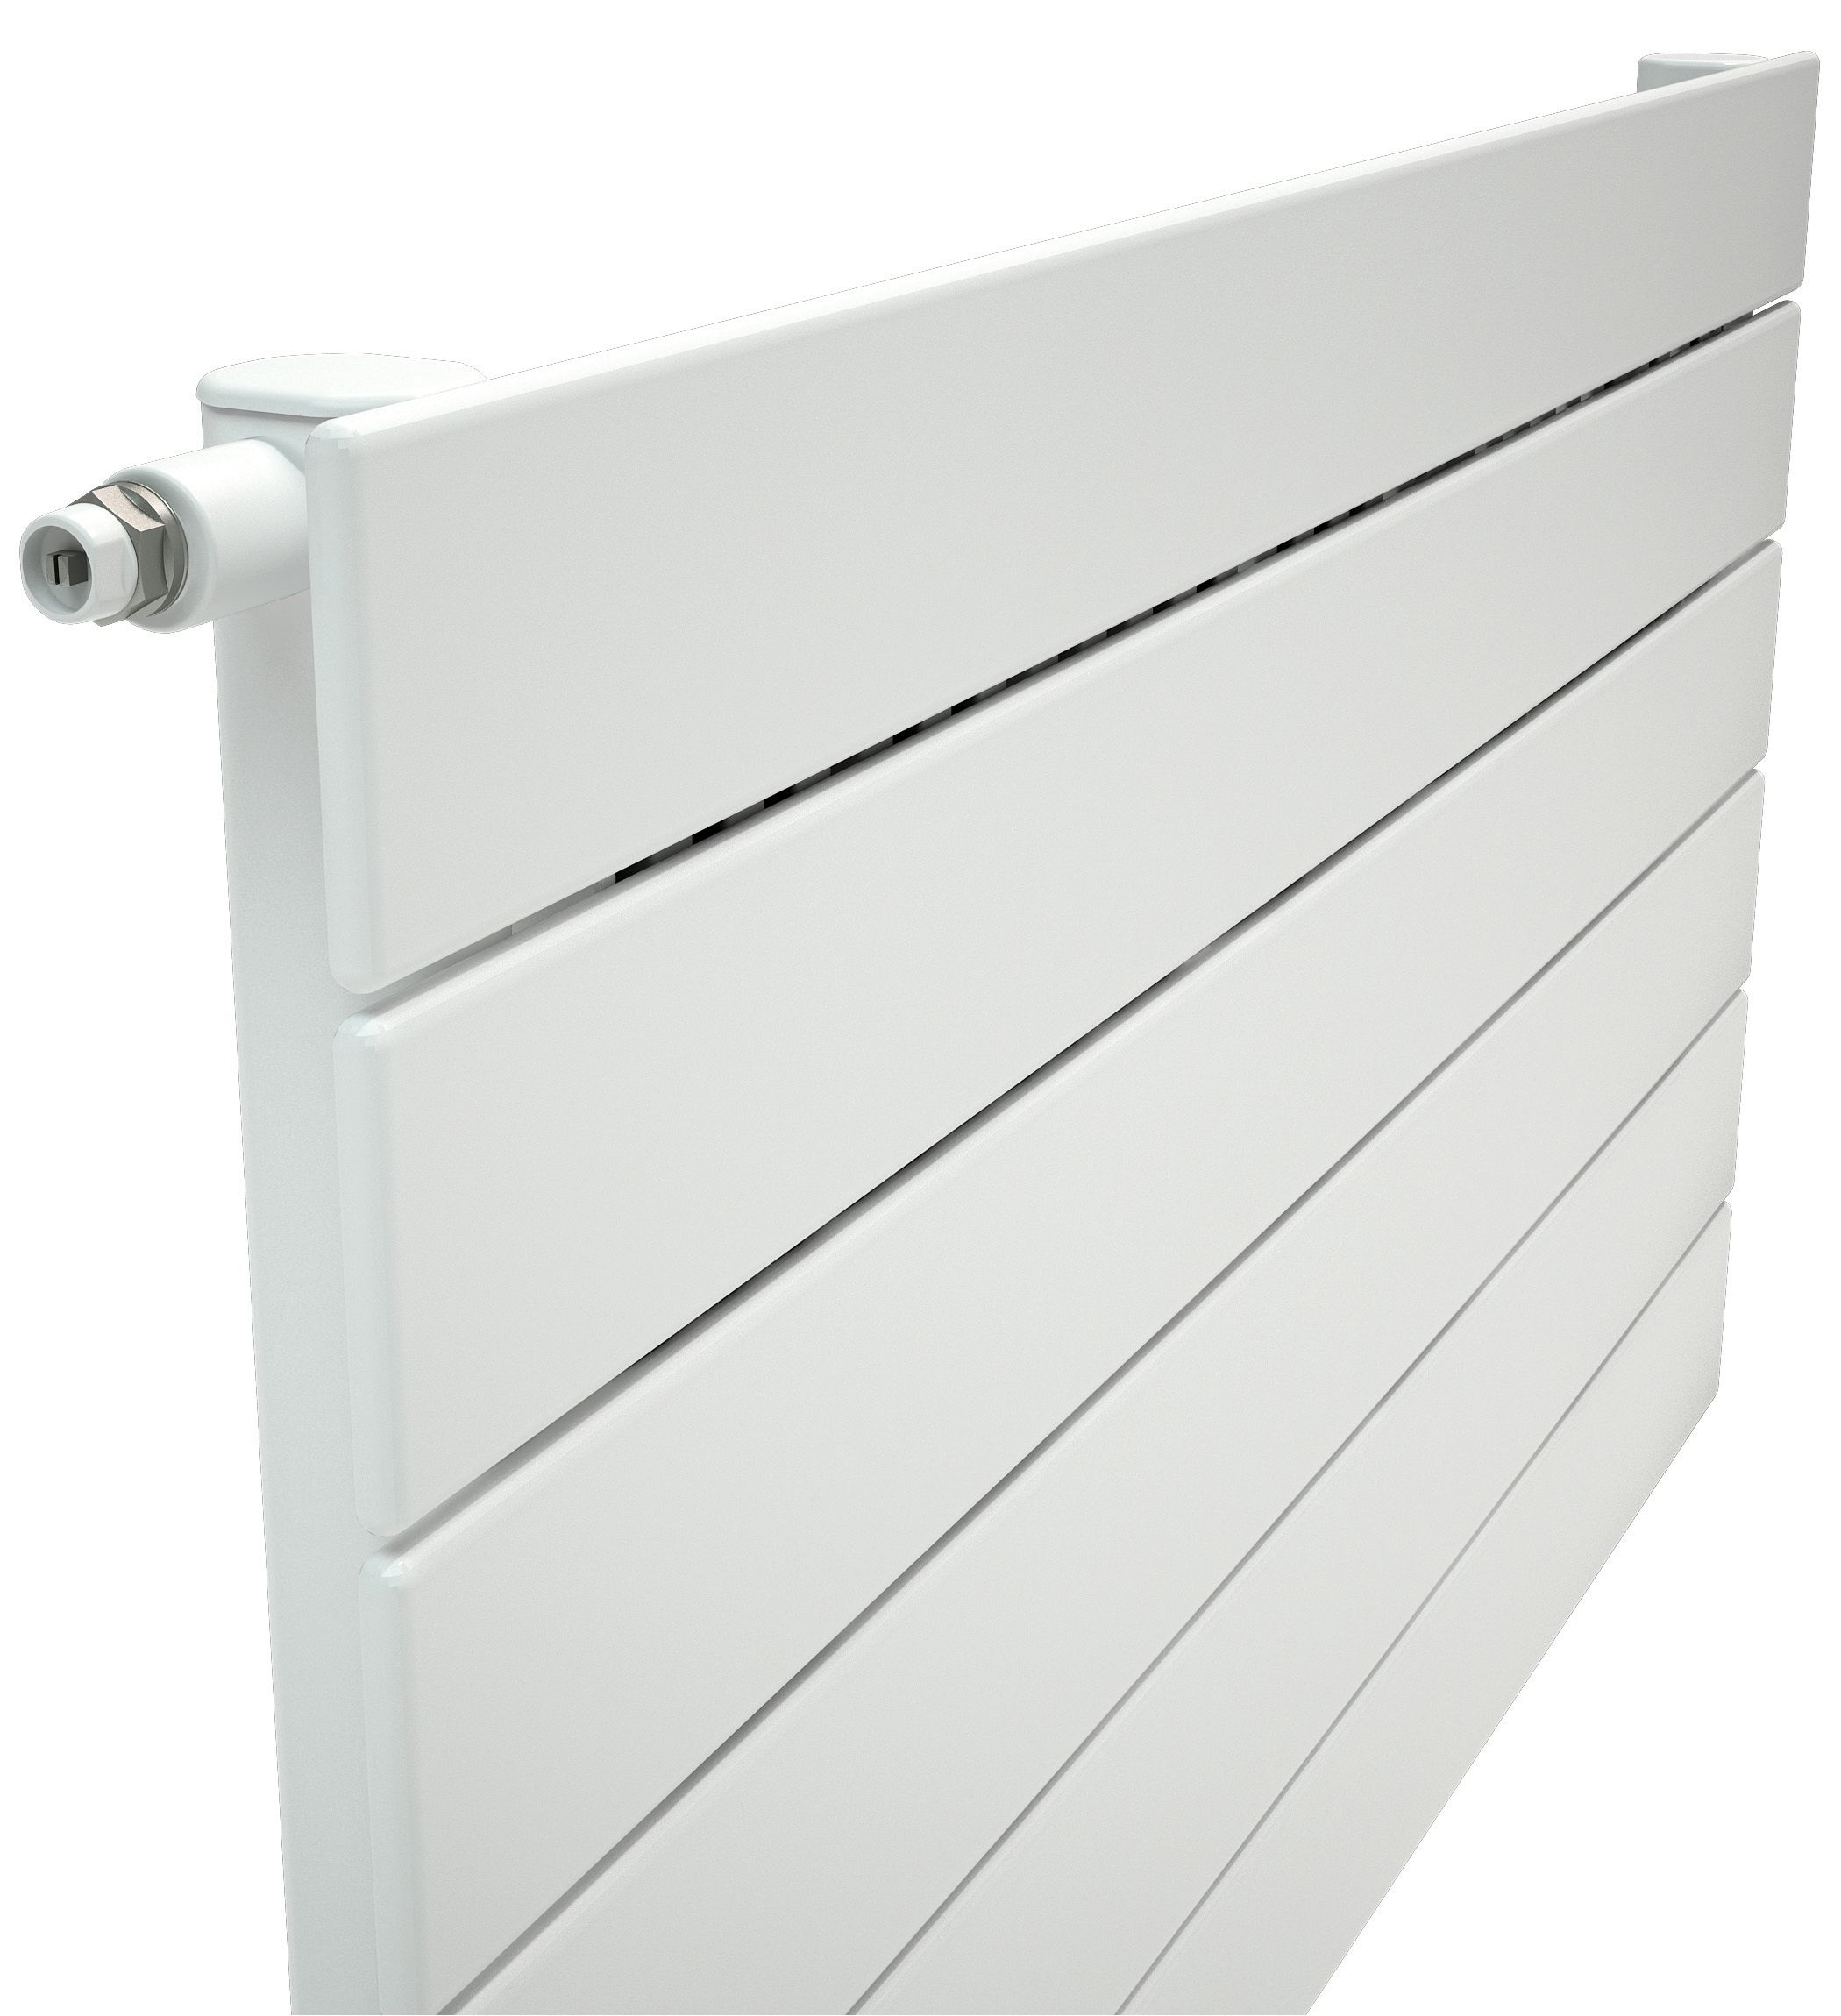 Image of Henrad Verona Single Panel Designer Radiator - White 592 x 1600 mm